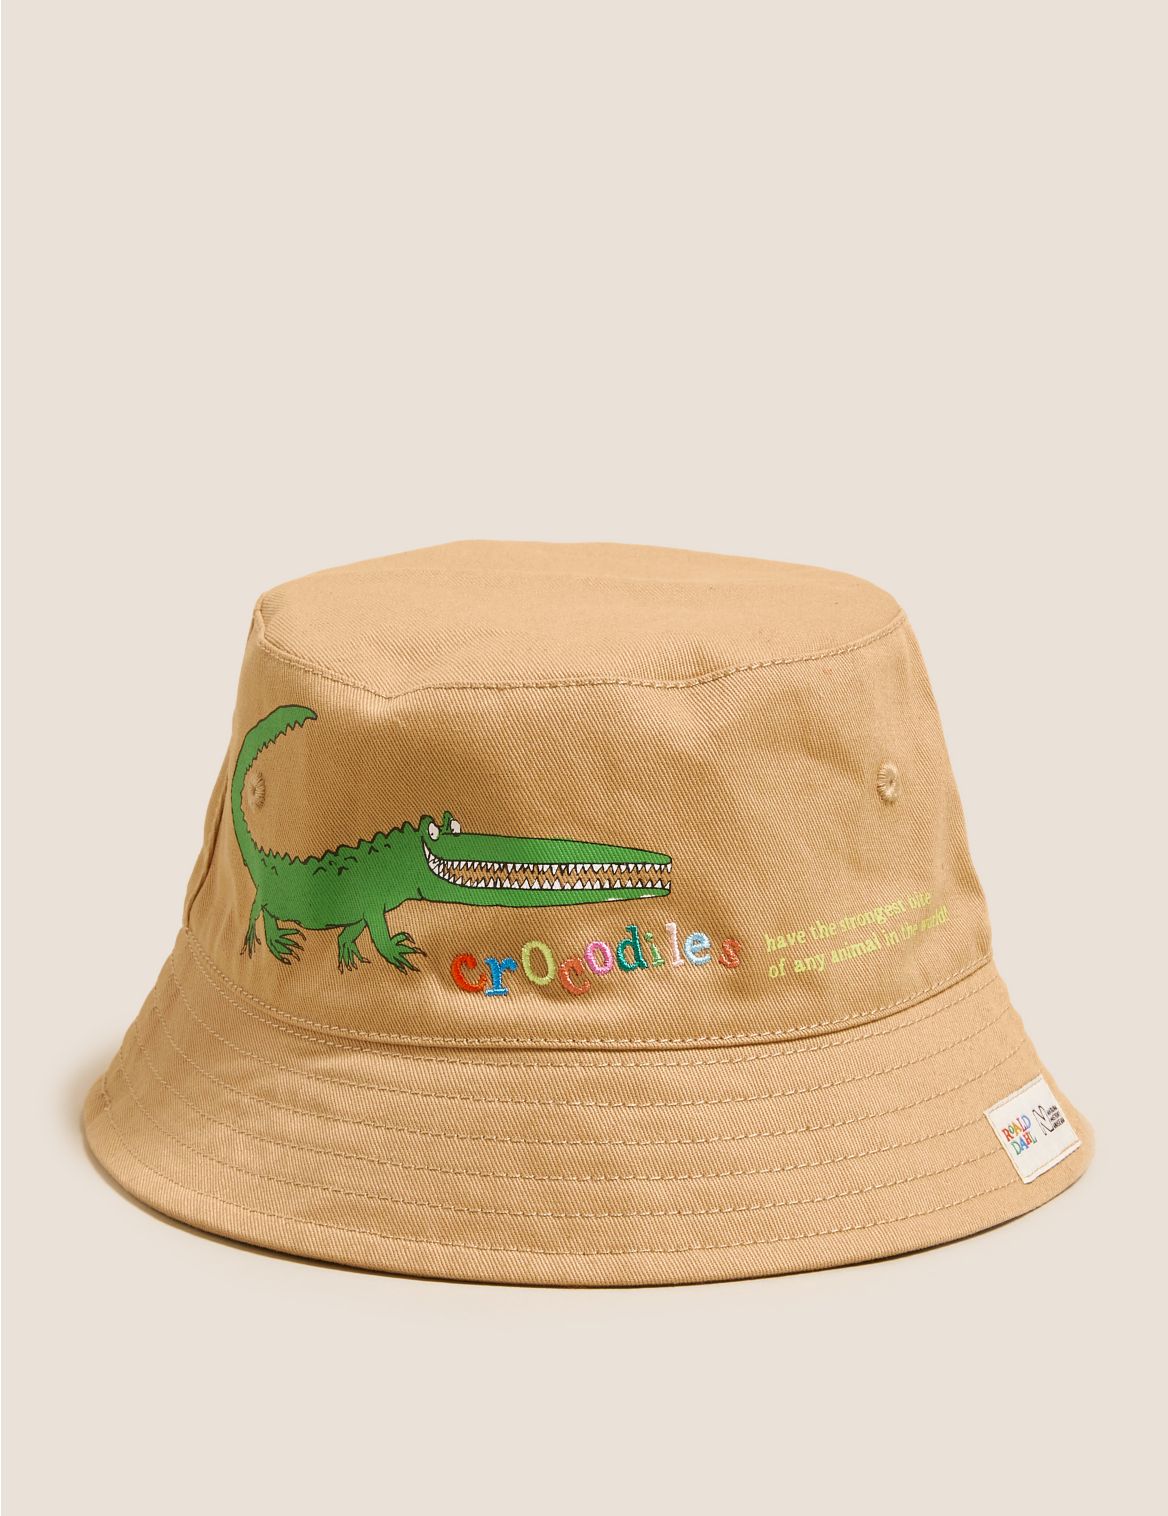 Kids' Roald Dahl&trade; & NHM&trade; Sun Hat (12 Mths - 6 Yrs) brown